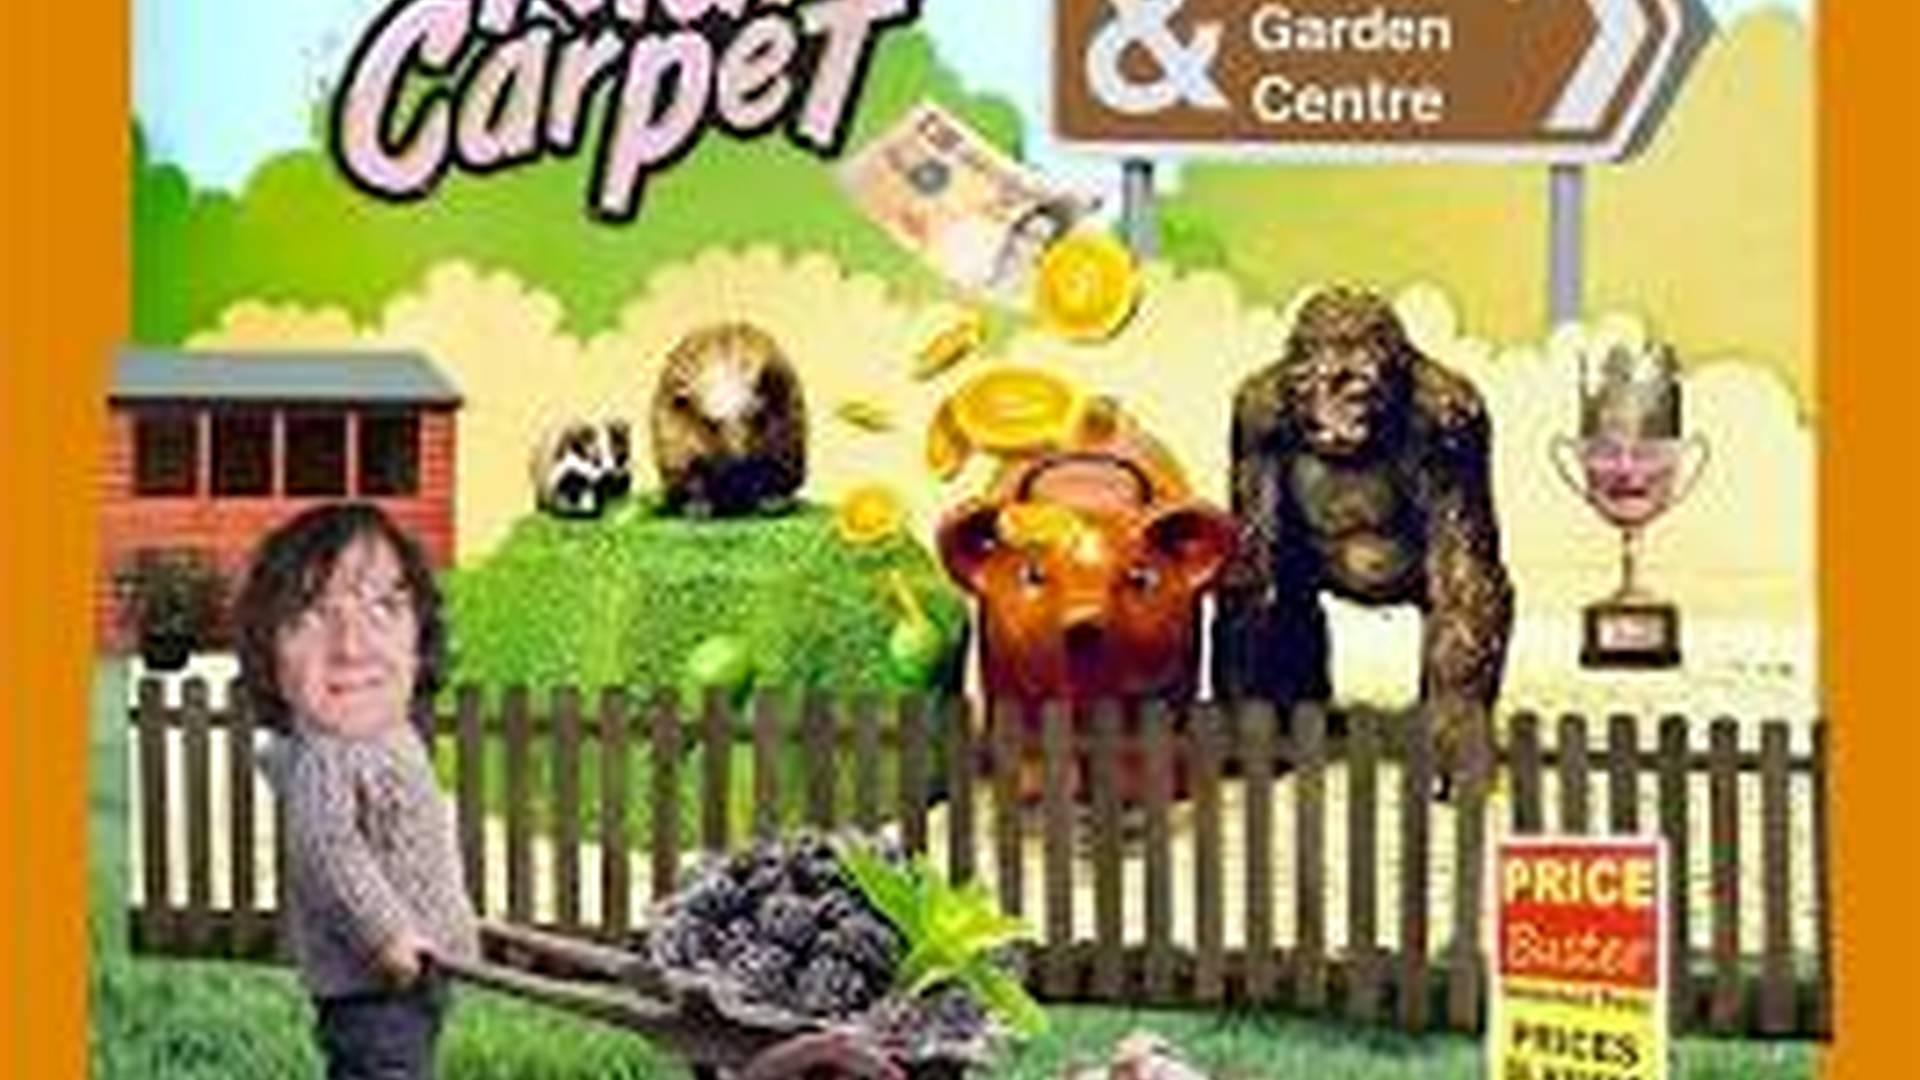 Kid Carpet & The Noisy Garden Centre photo